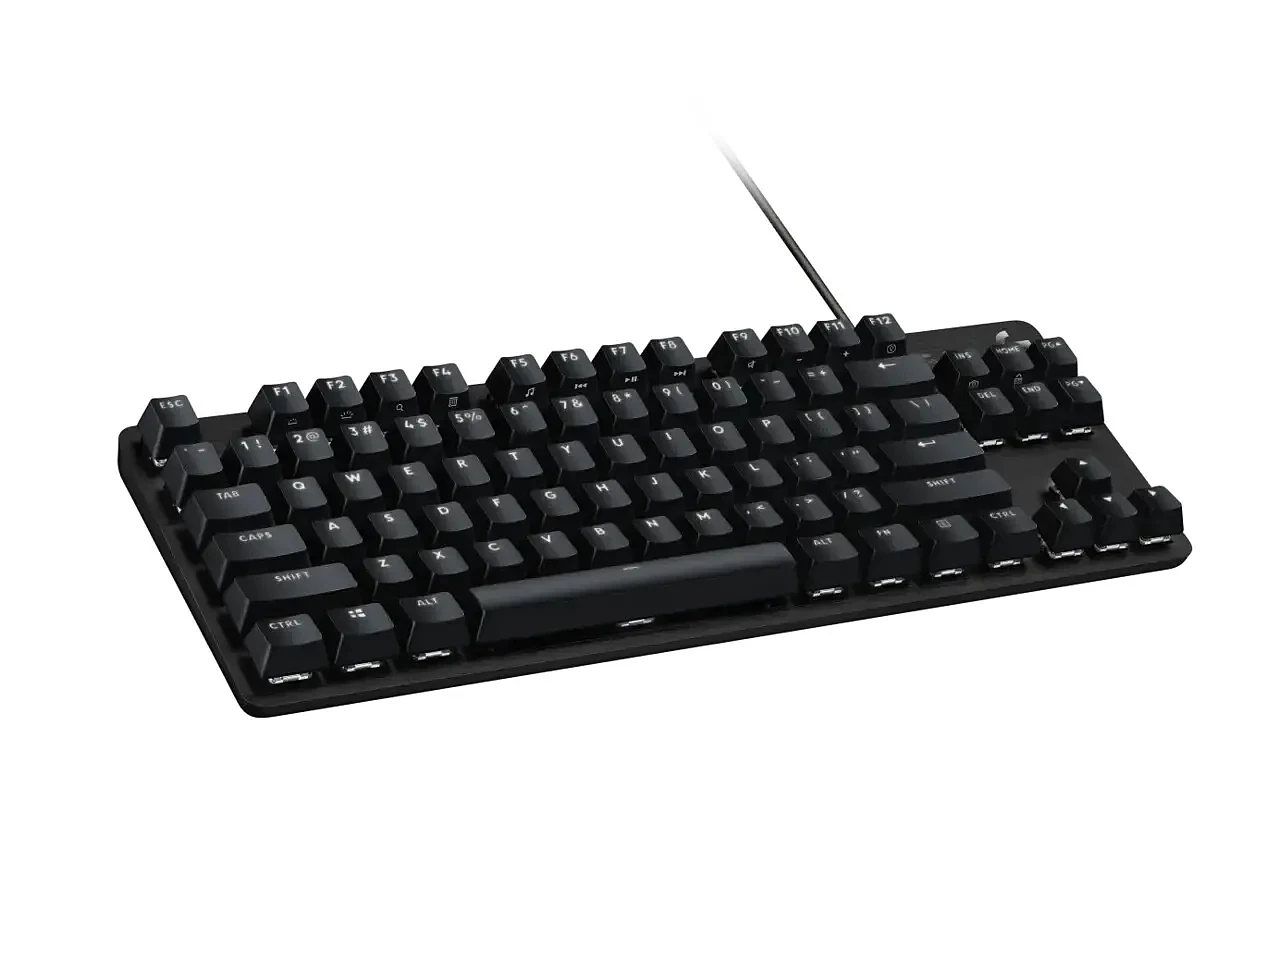 Logitech G413 SE/G413 TKL两款游戏机械键盘发布 - 4